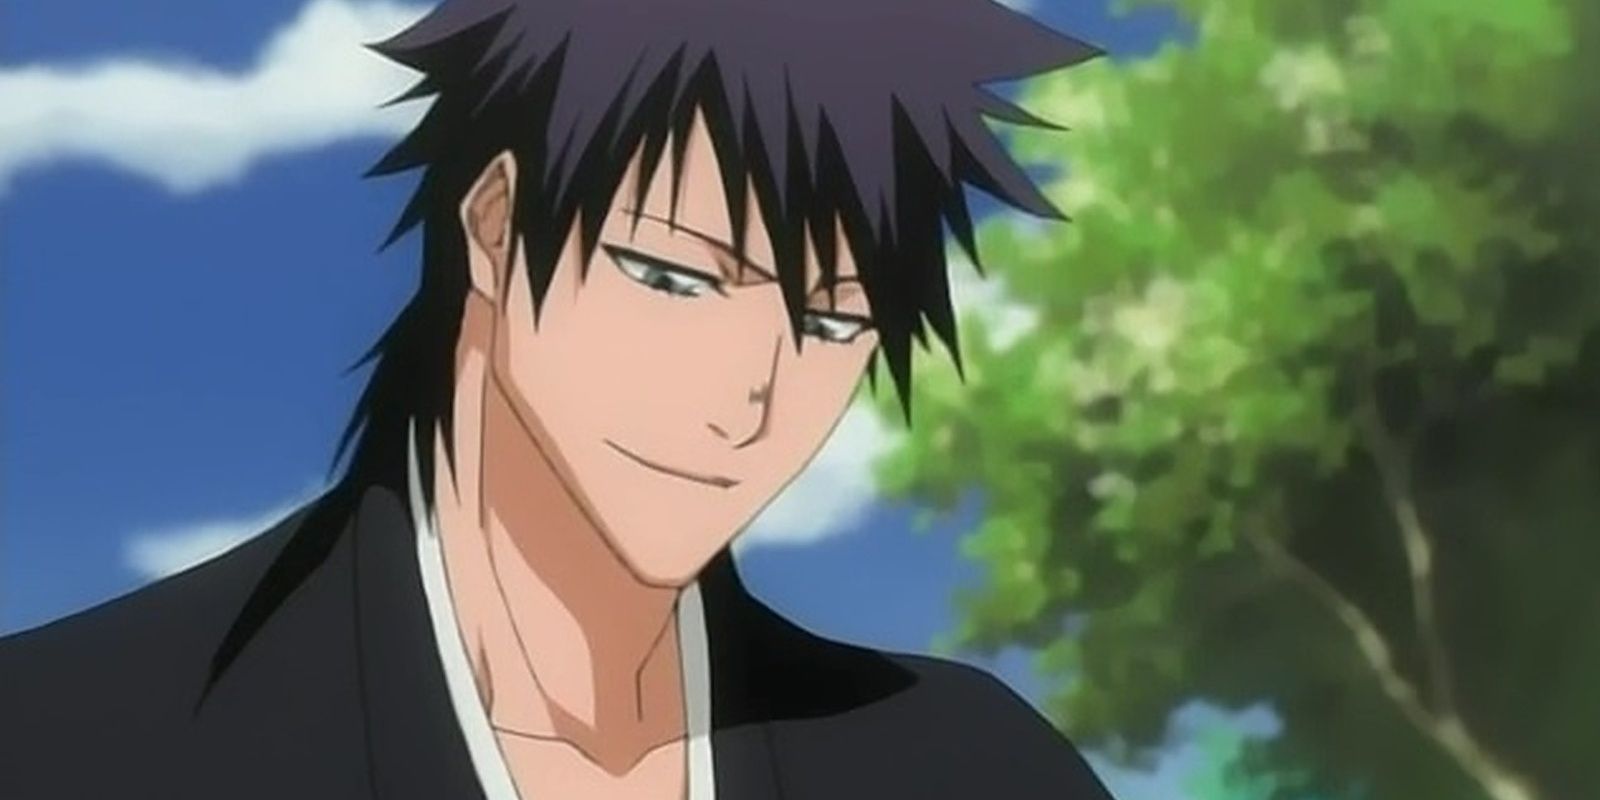 Kaien Shiba weakly smiles in Bleach anime.